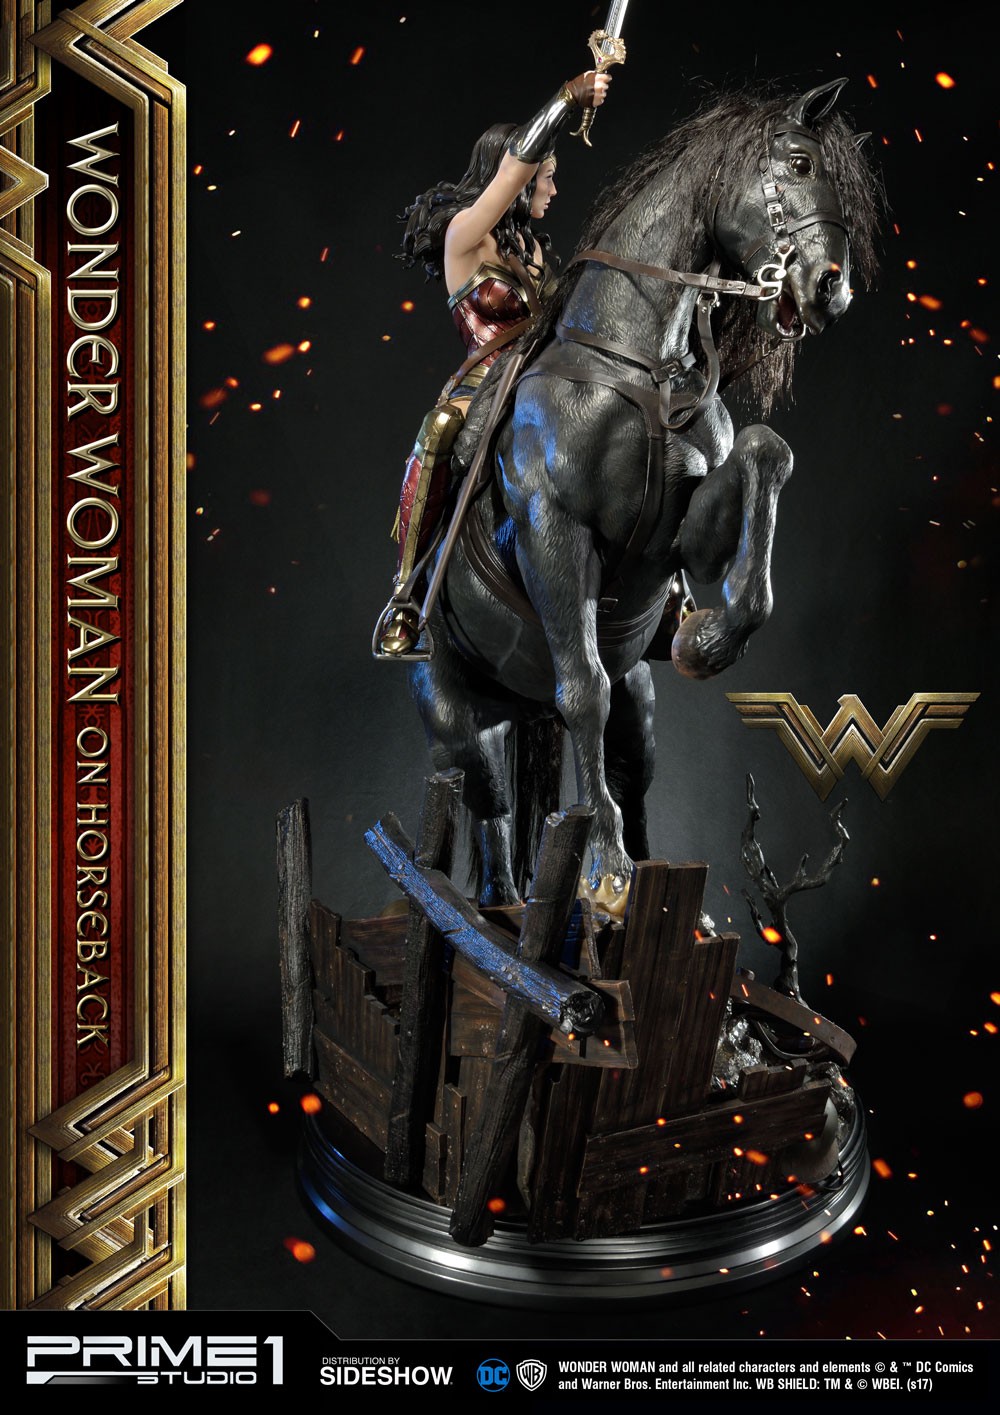 Wonder Woman  on Horseback